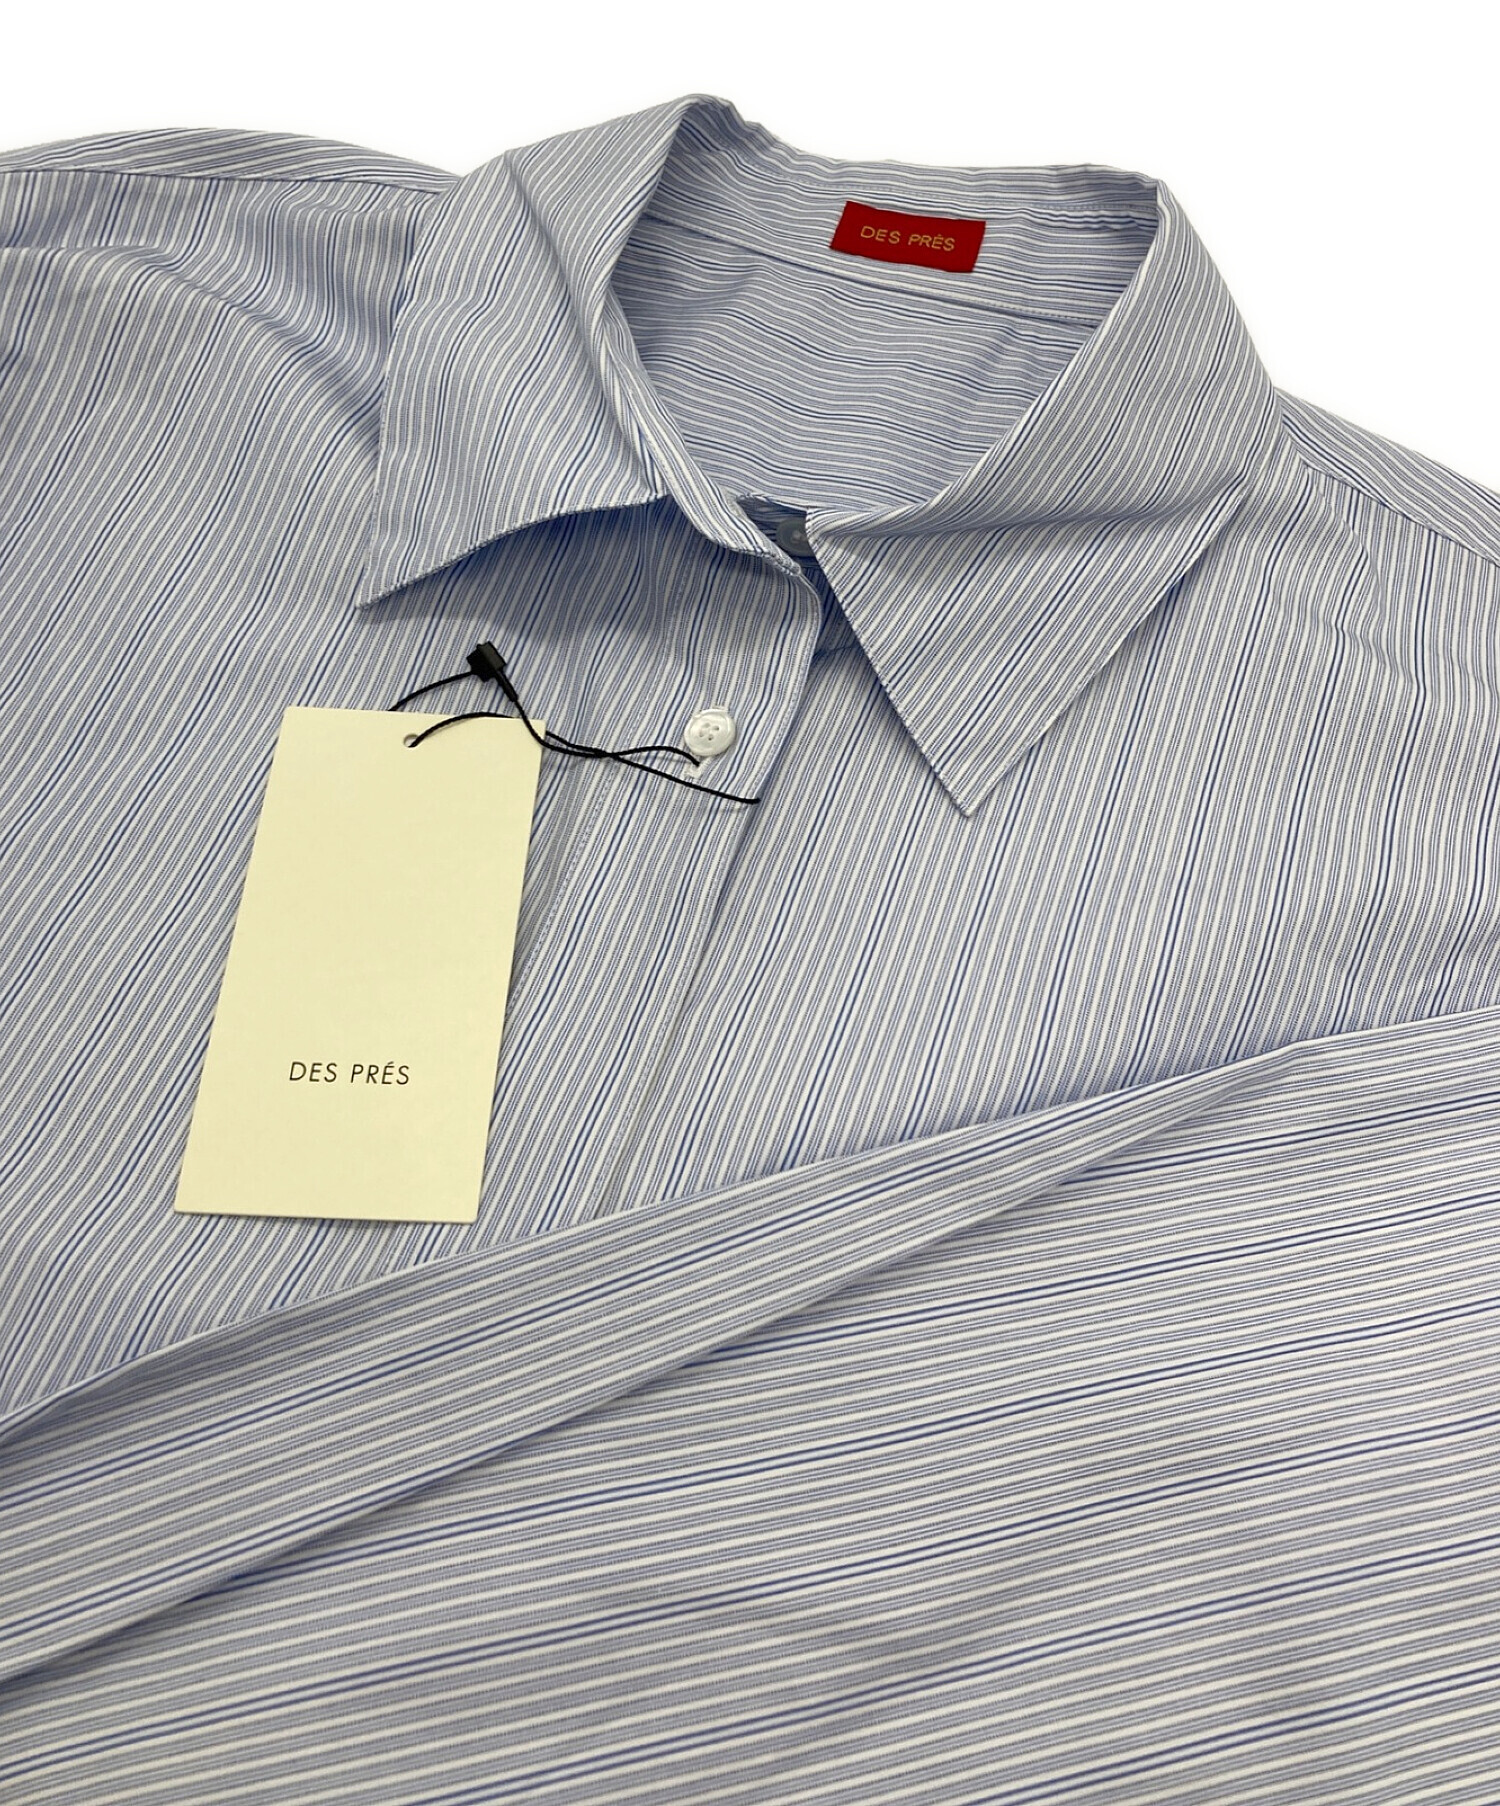 DES PRES (デ プレ) ギザコットンストライプ オーバーサイズドシャツ スカイブルー サイズ:40 未使用品